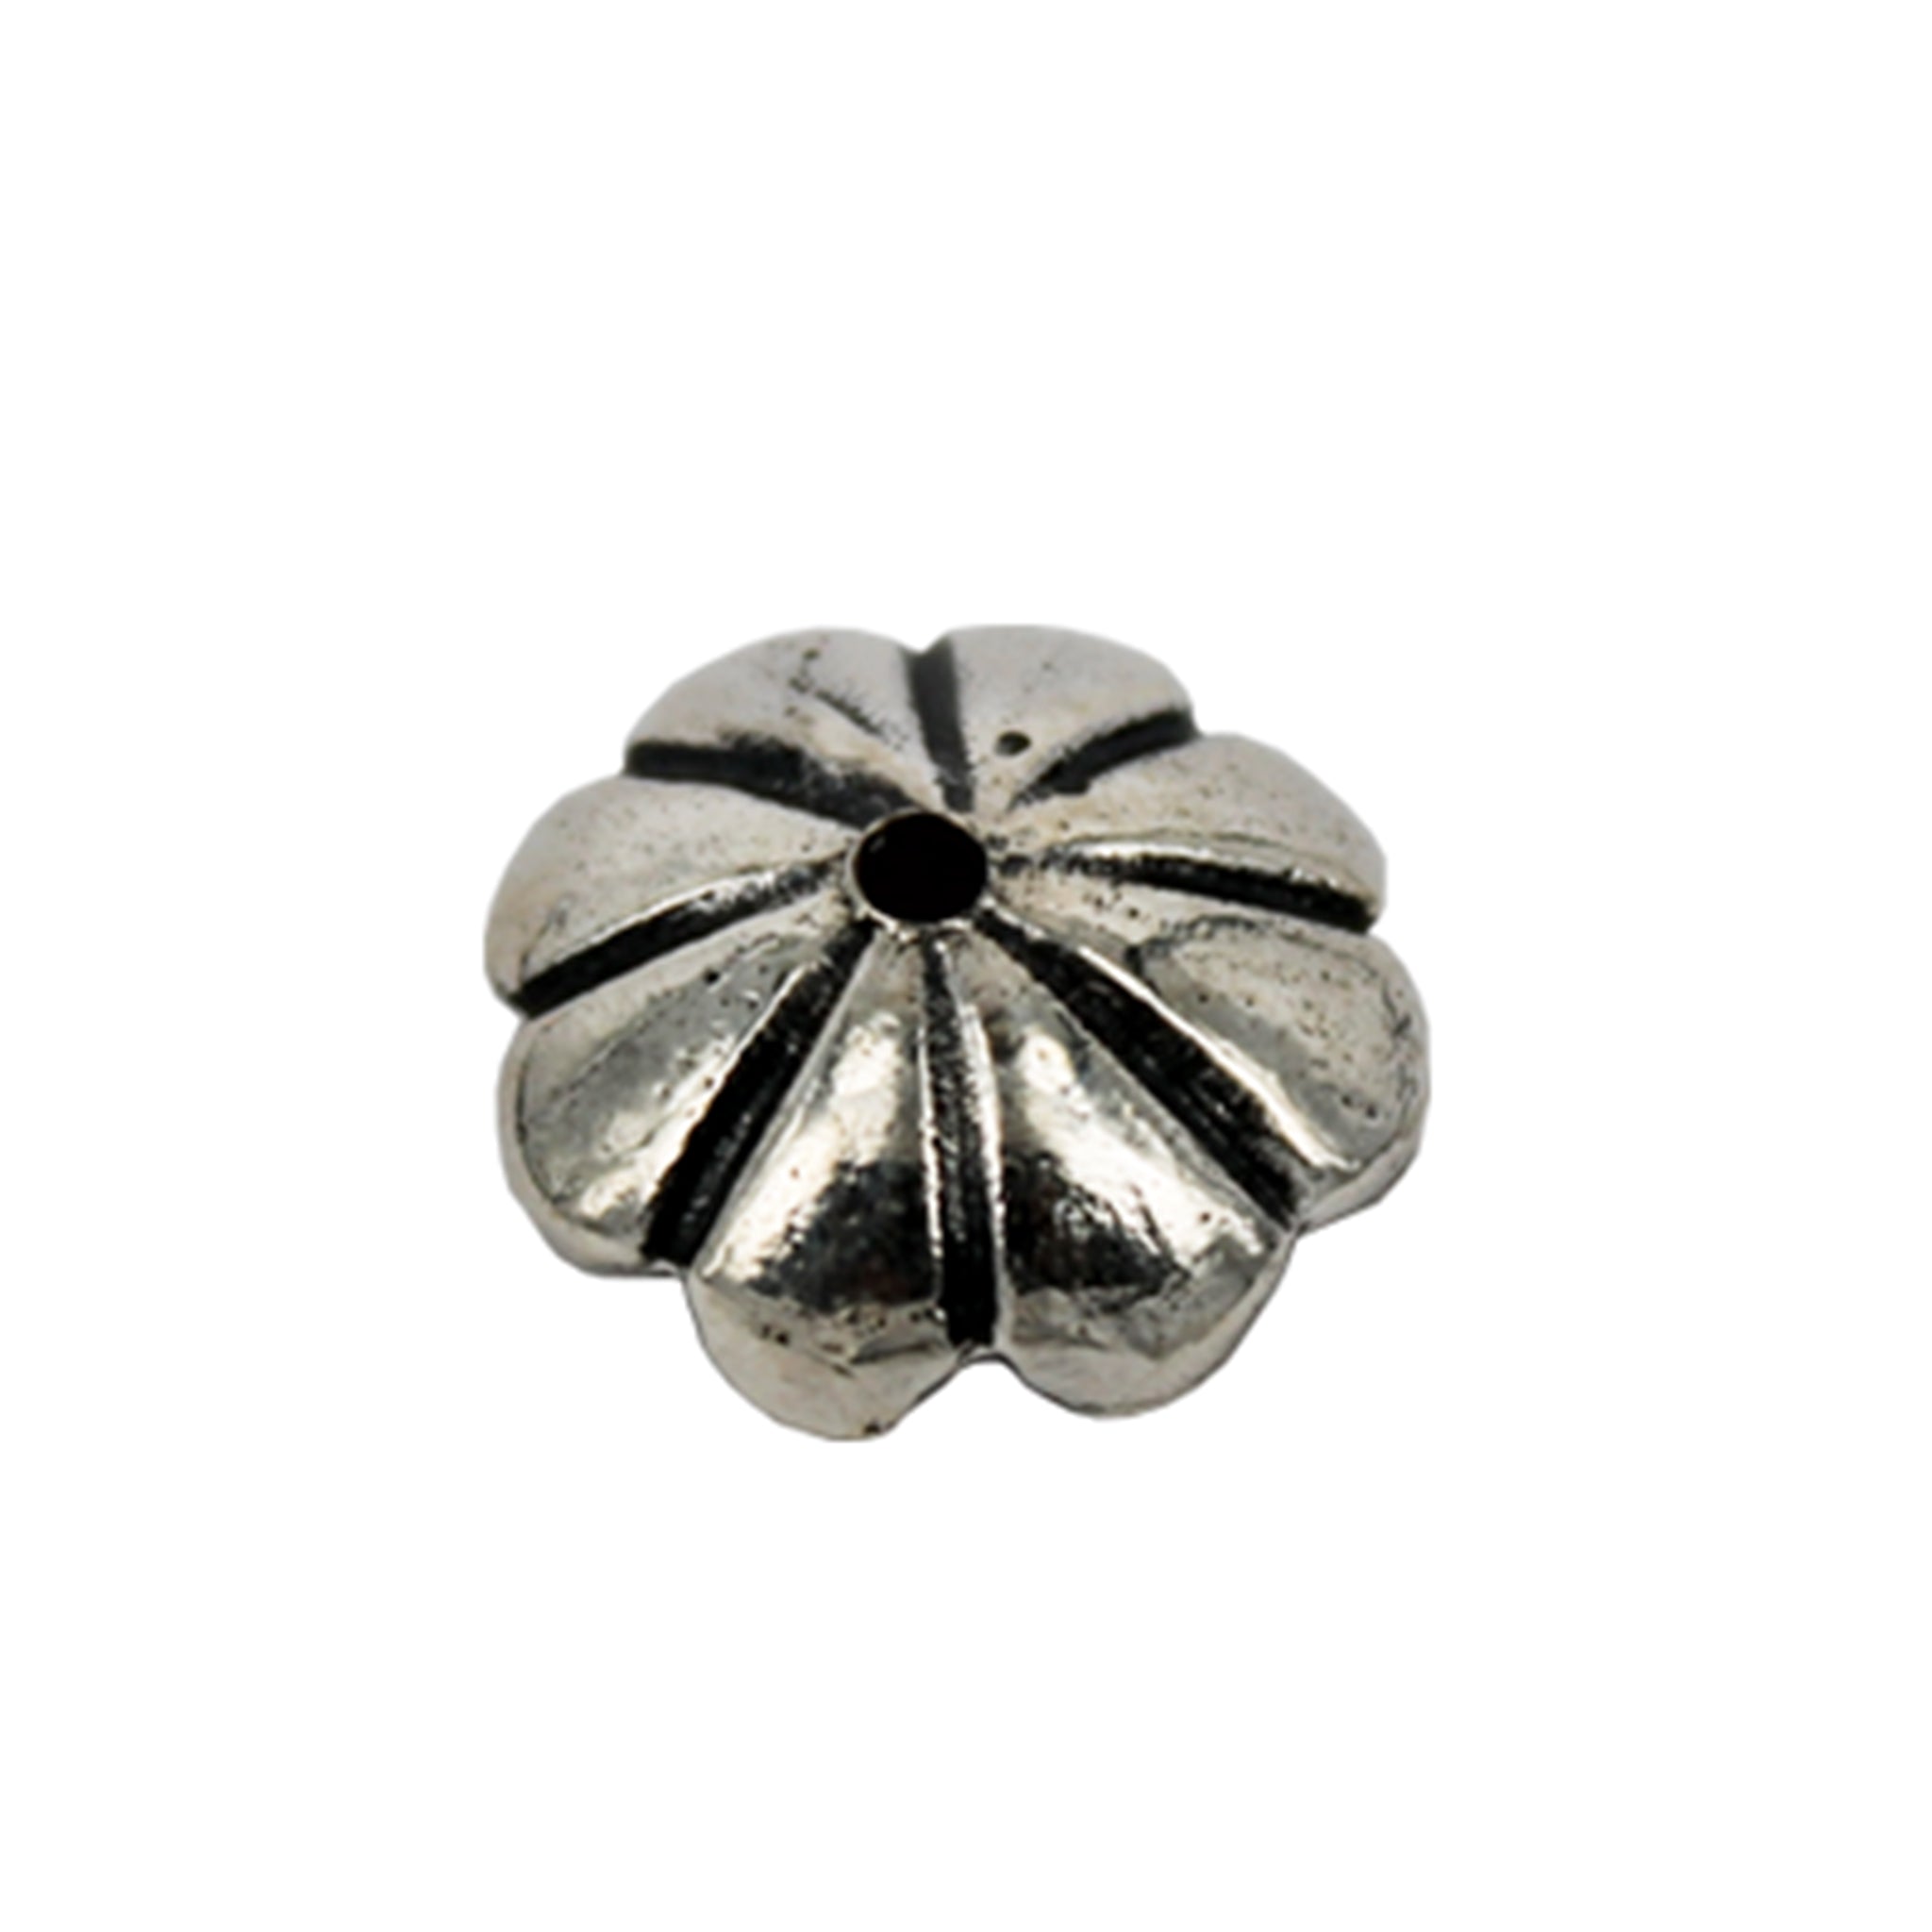 Petals Bead Cap in Antique Sterling Silver 11.97mm